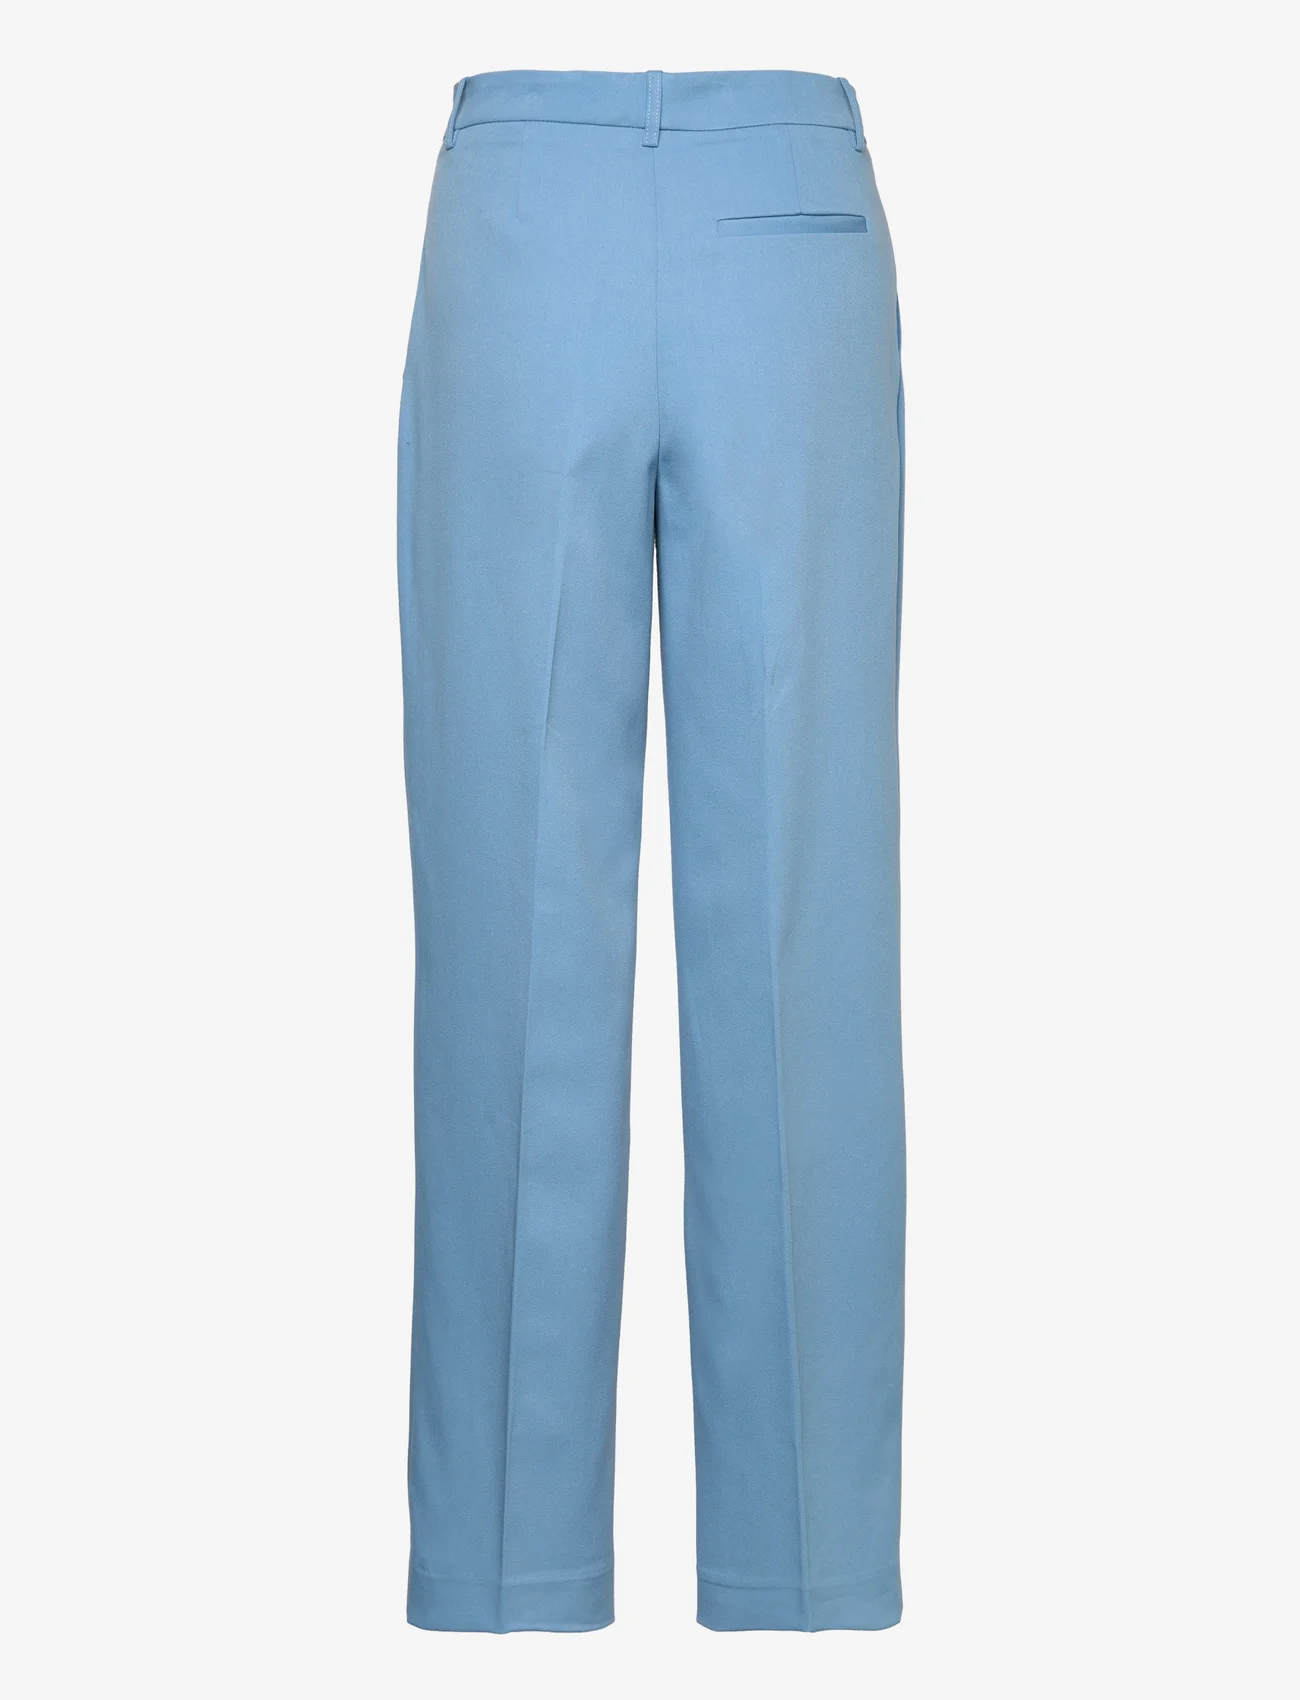 Coster Copenhagen - Pants with wide legs - Petra fit - dalykinio stiliaus kelnės - cool blue - 1